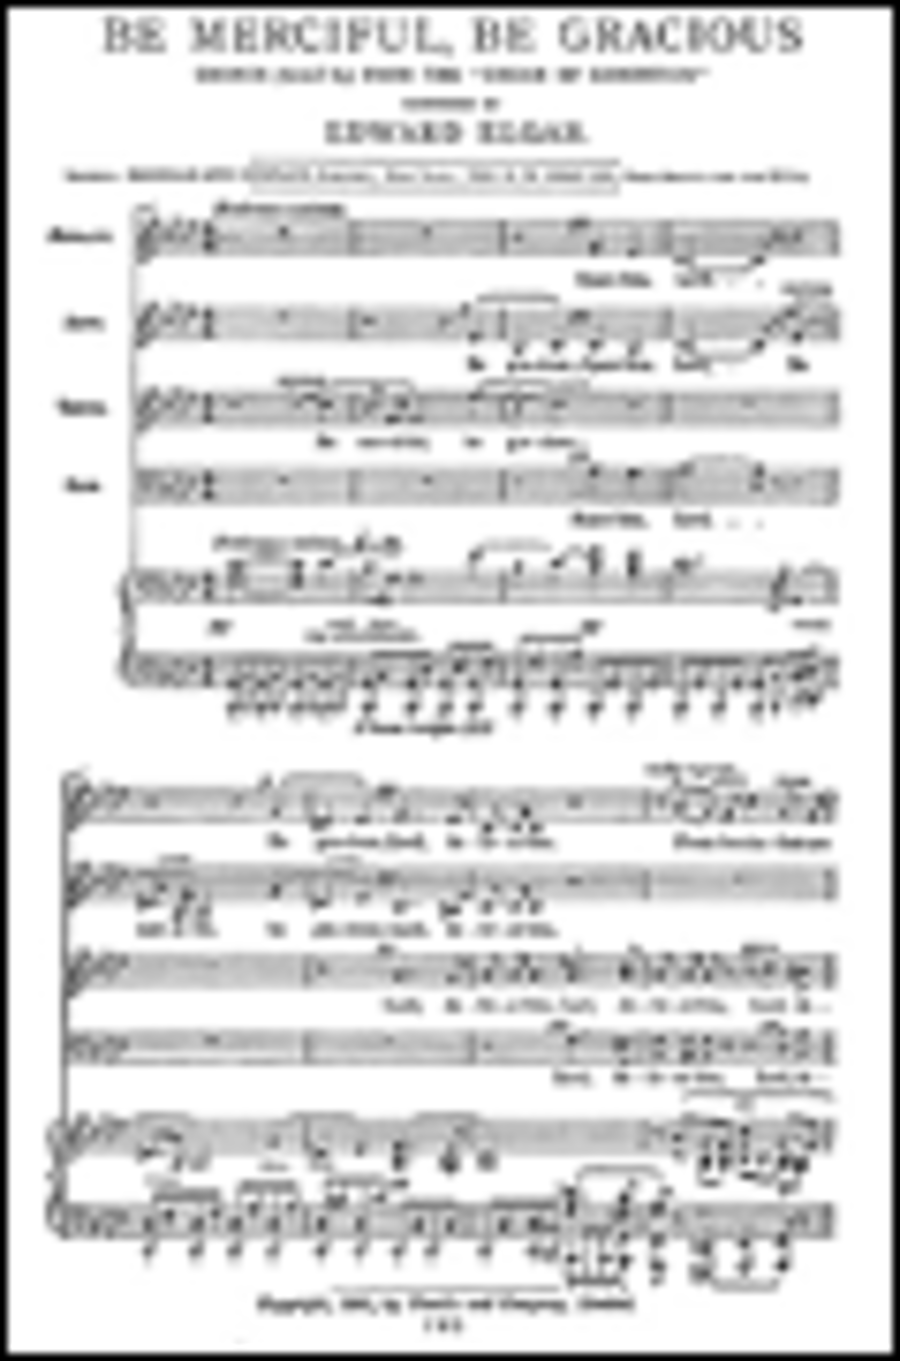 Elgar: Be Merciful, Be Gracious for SATB and Organ or Piano acc.